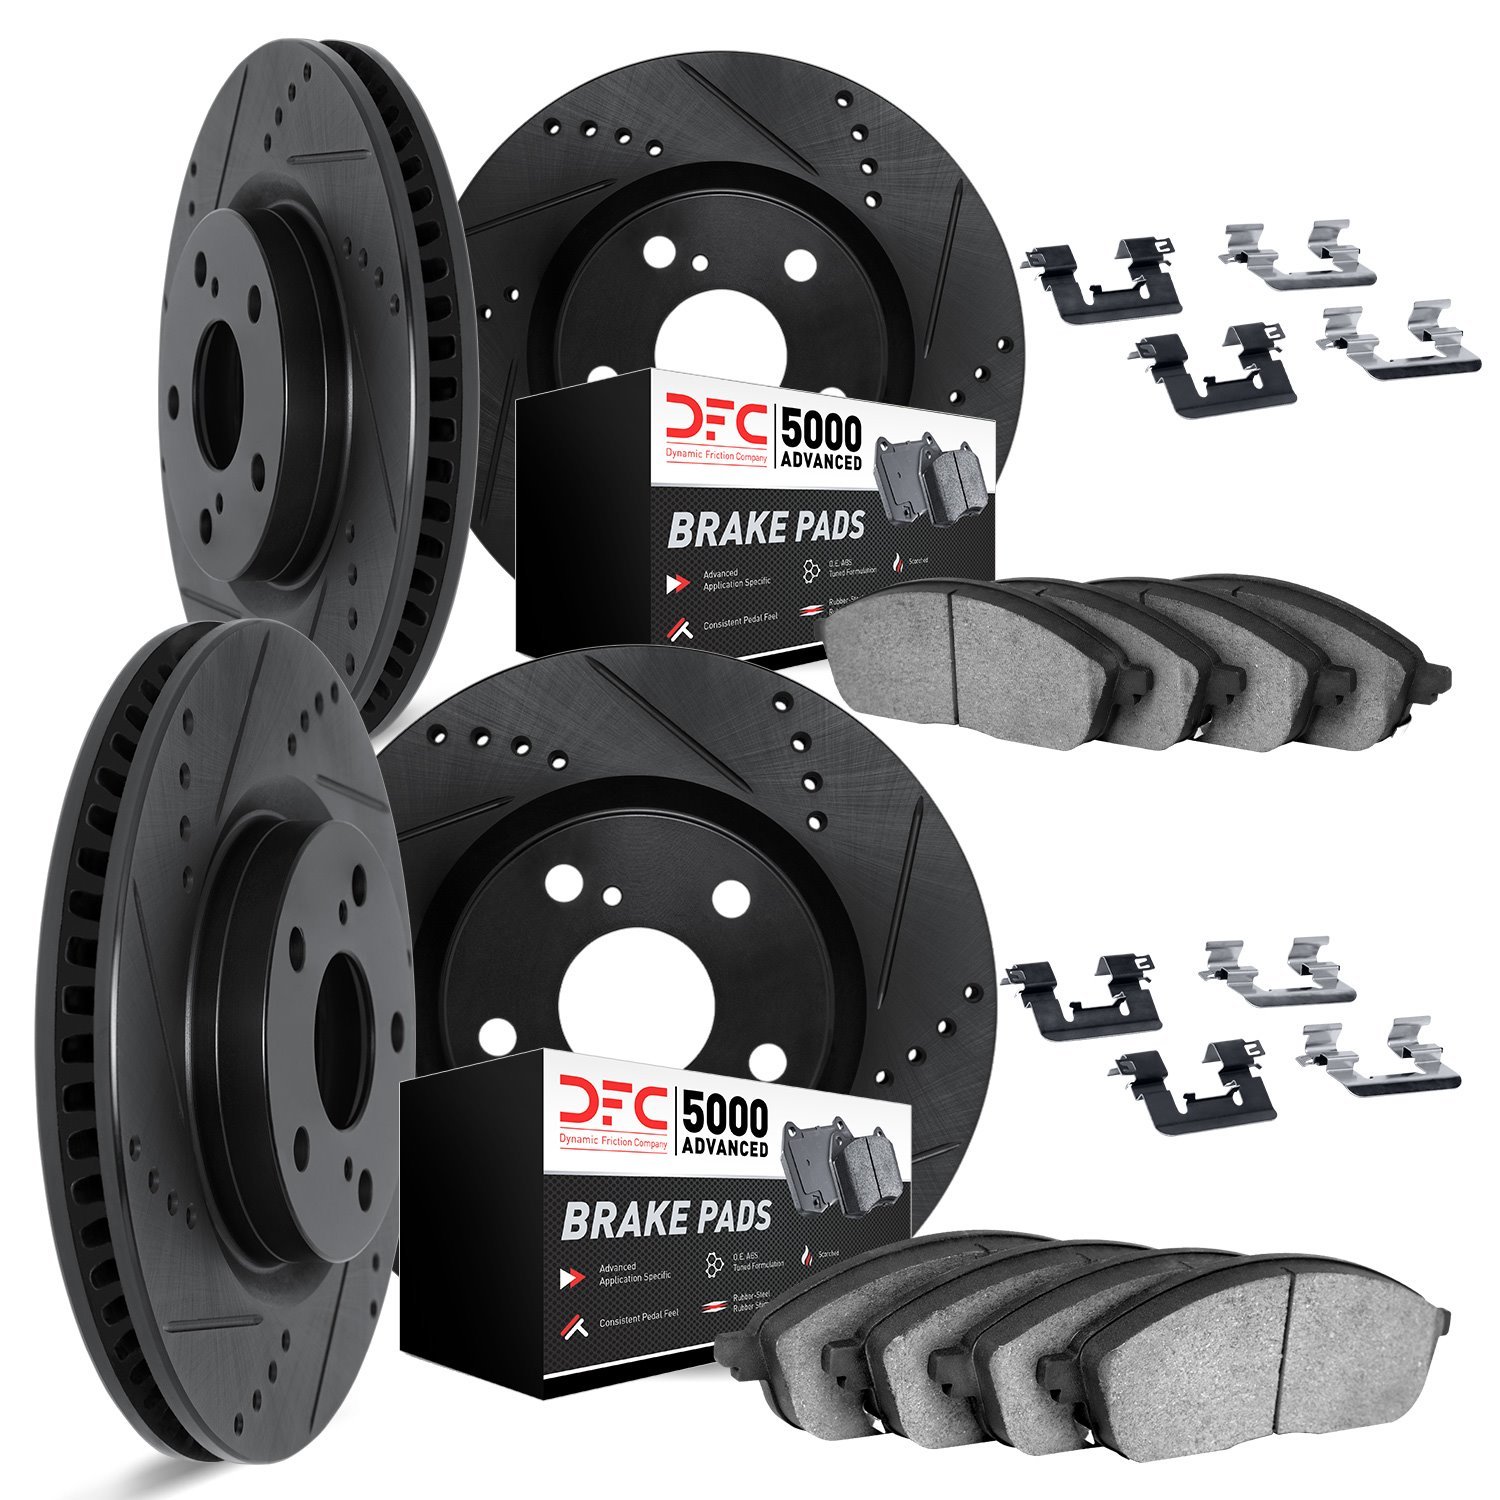 8514-67077 Drilled/Slotted Brake Rotors w/5000 Advanced Brake Pads Kit & Hardware [Black], 2016-2017 Infiniti/Nissan, Position: